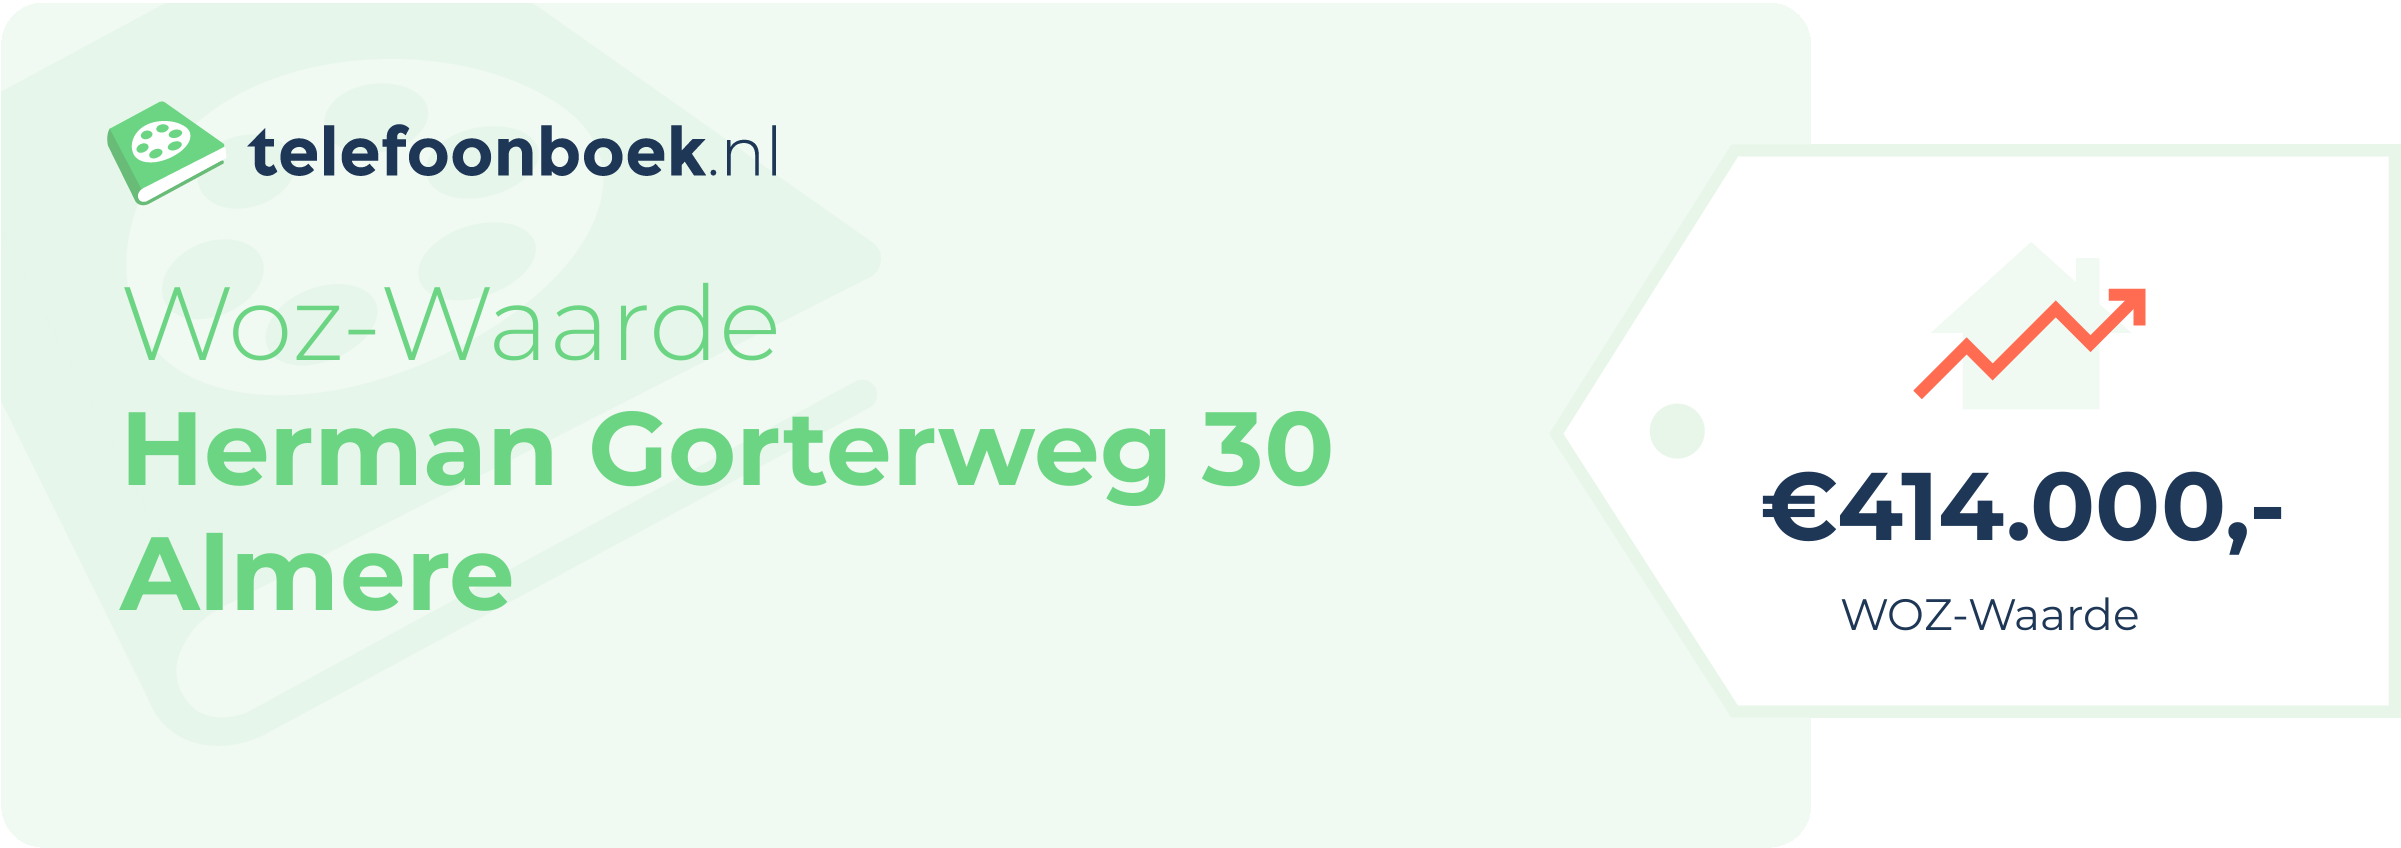 WOZ-waarde Herman Gorterweg 30 Almere